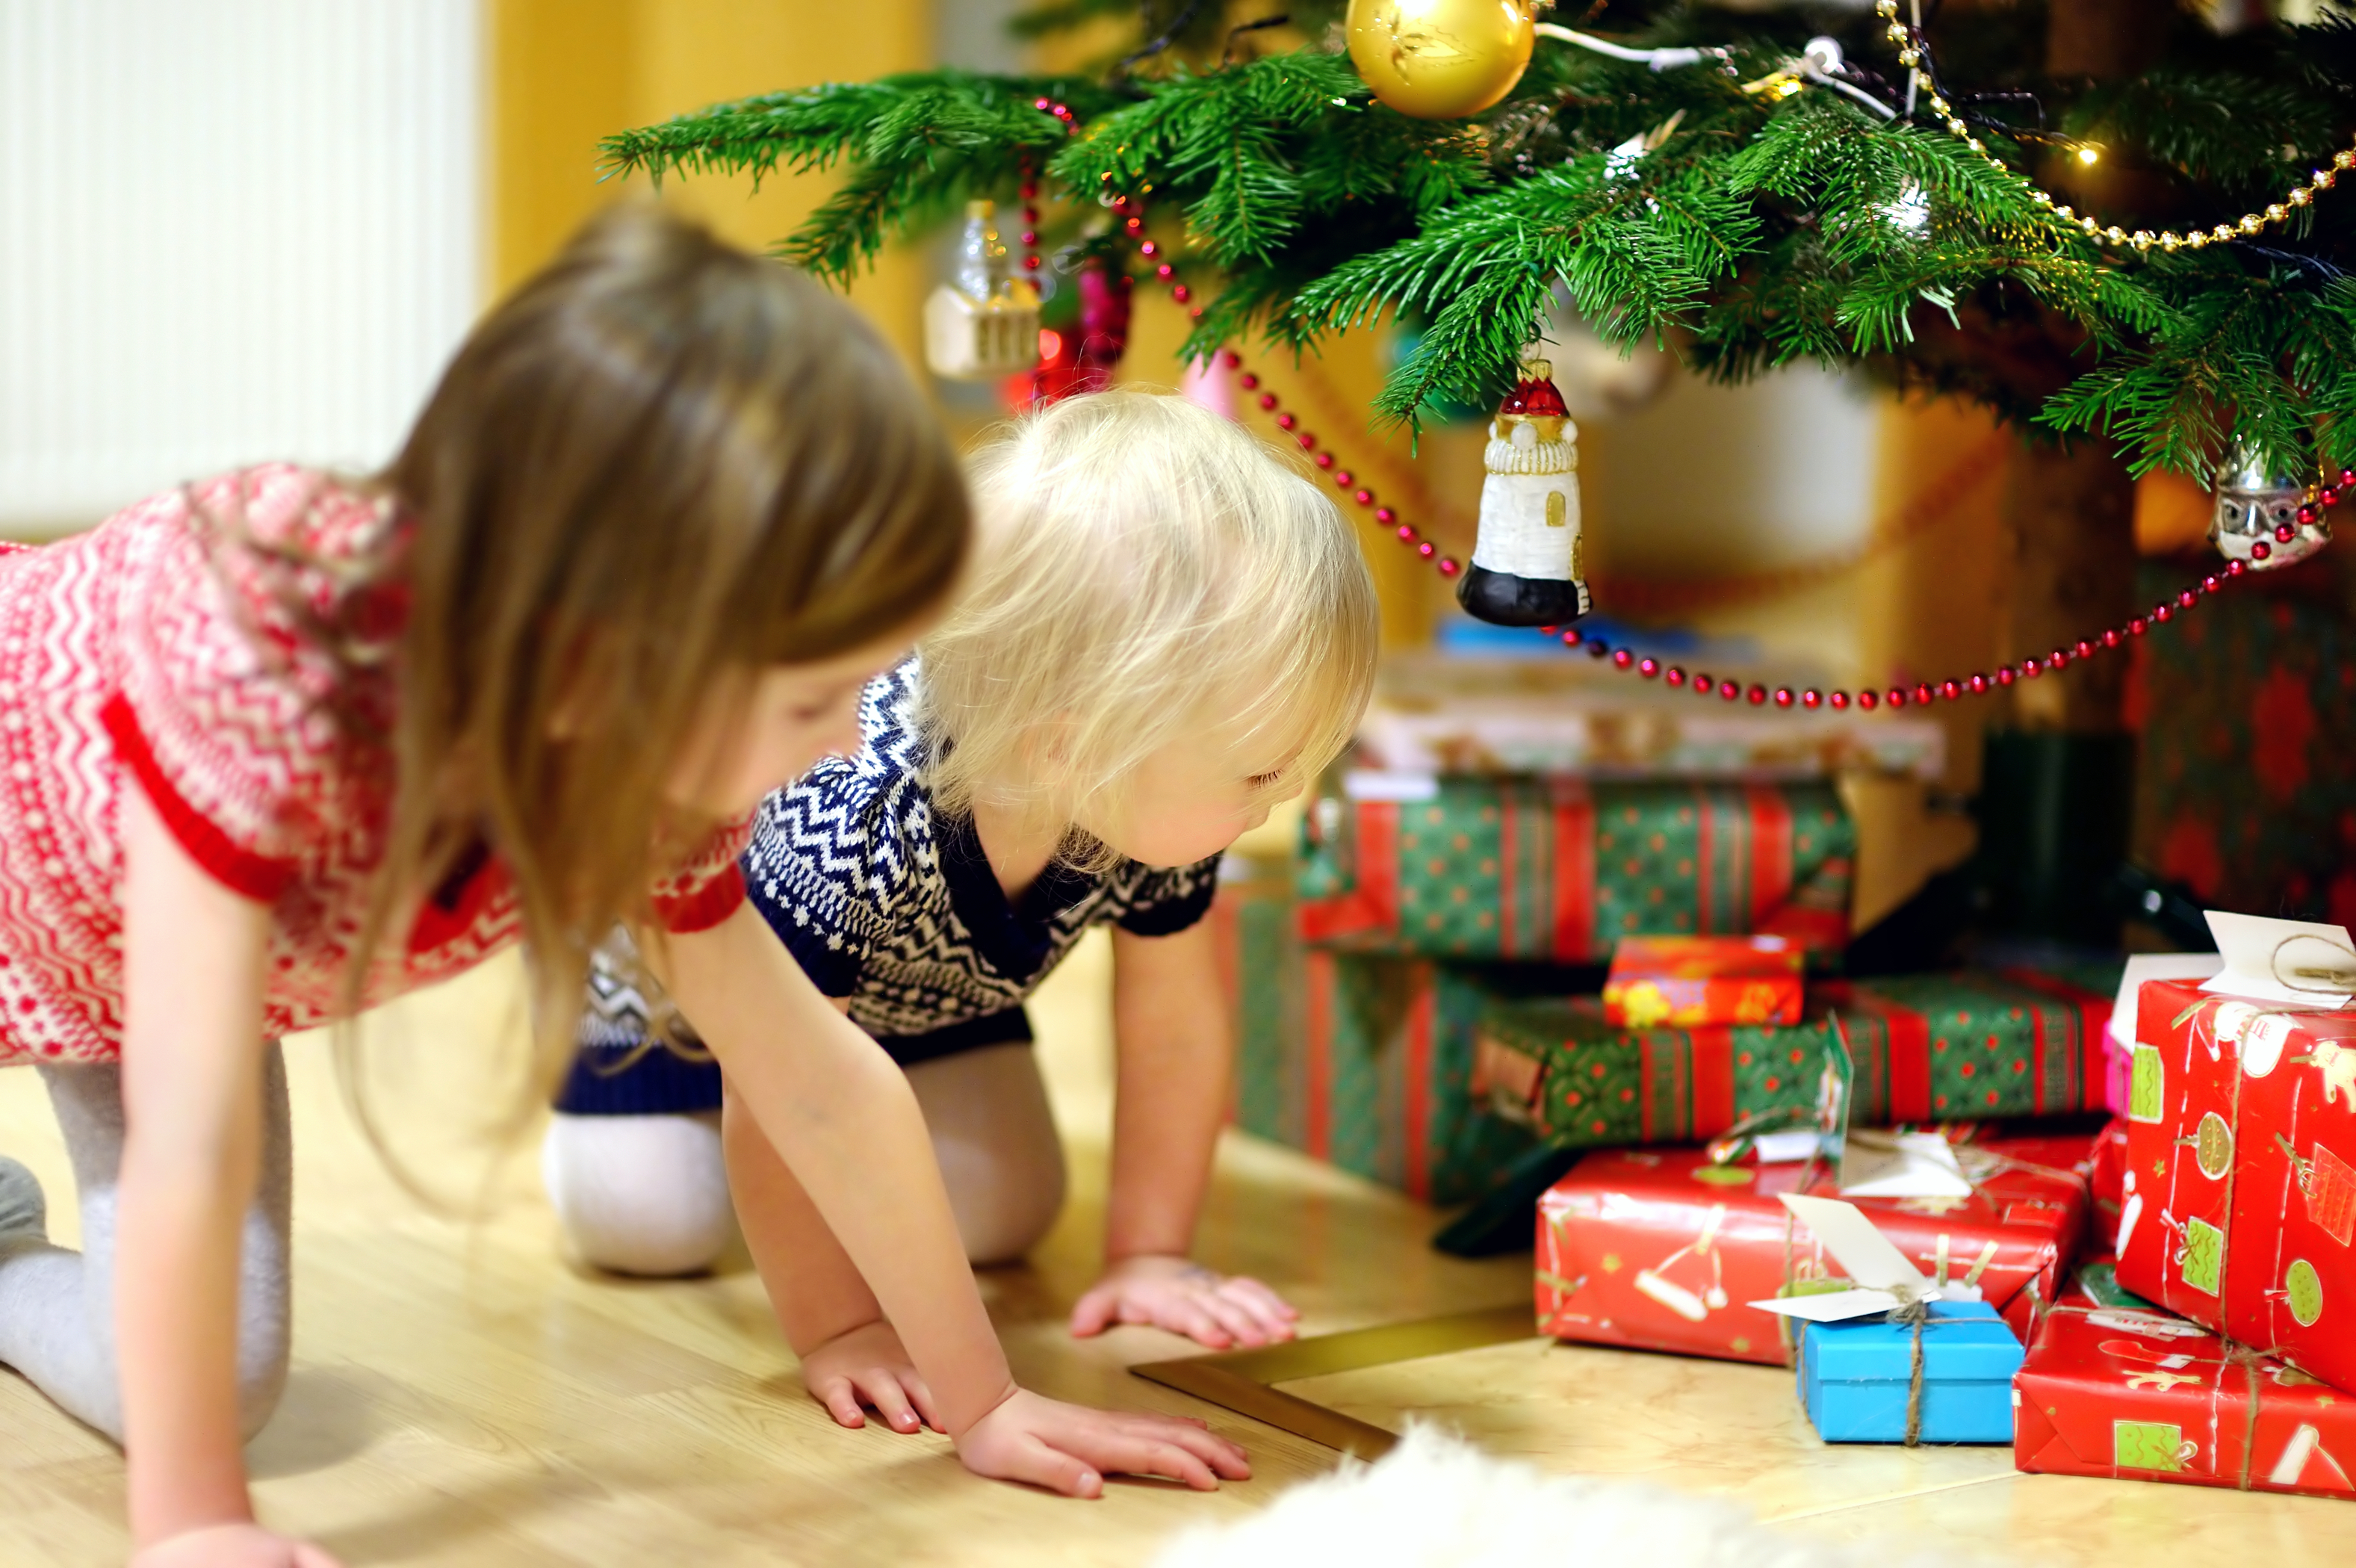 Kids looking at presents | Source: Shuttertsock